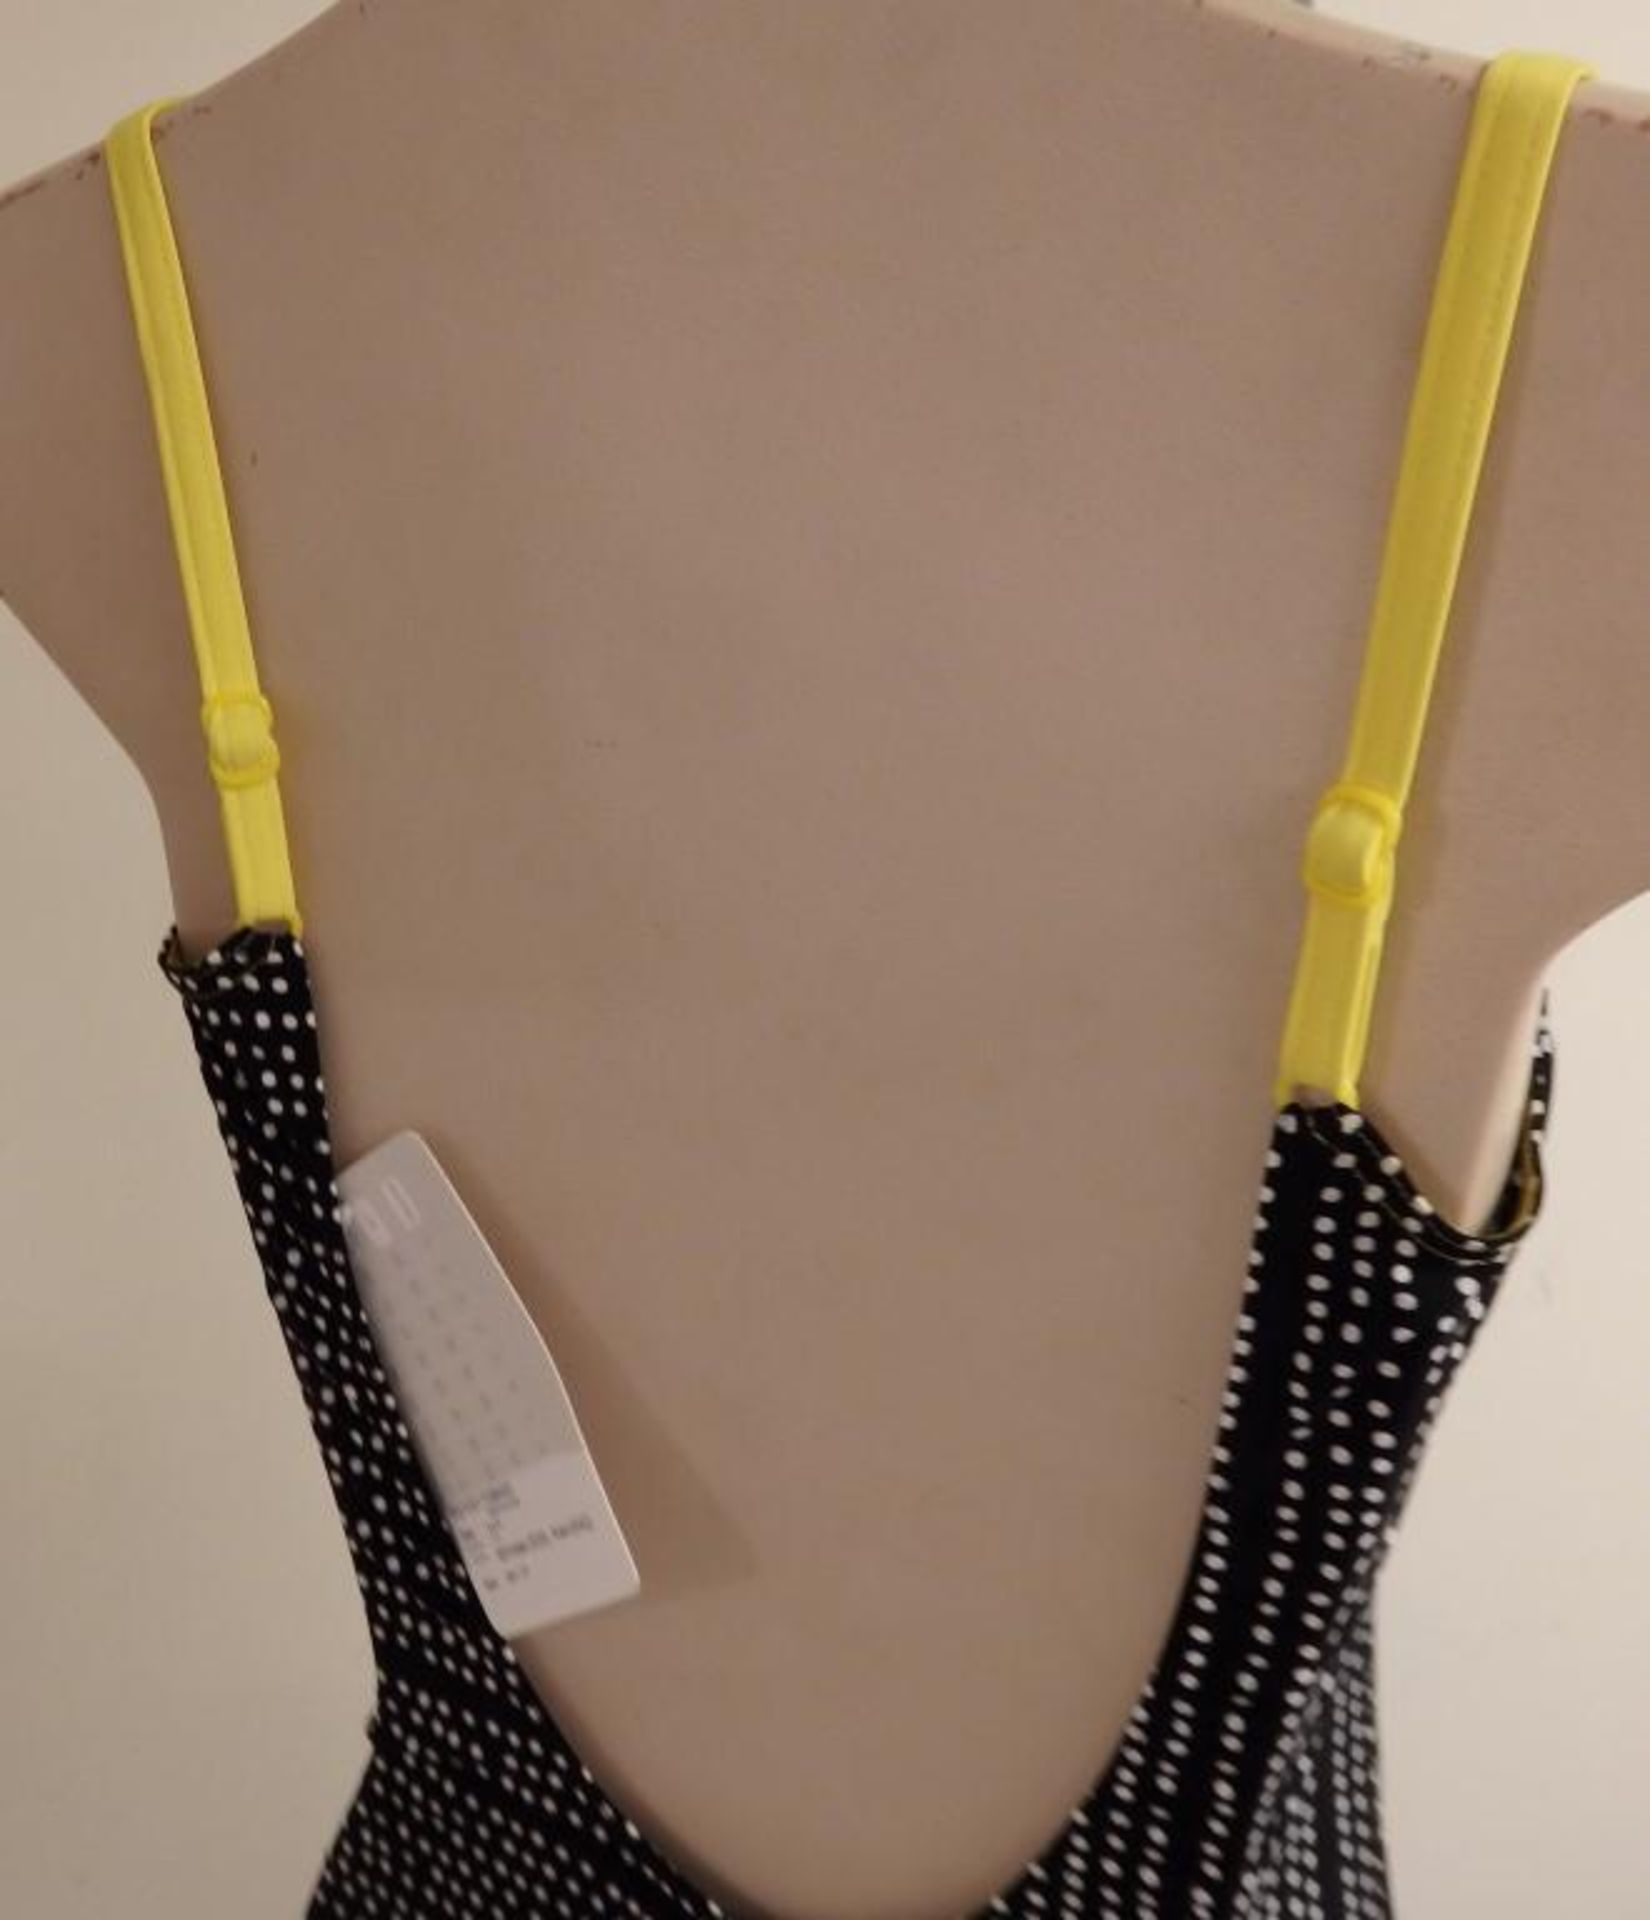 1 x Rasurel - Black Polka dot with canary yellow trim & frill Tobago Swimsuit - R21031 - Size 2 - UK - Image 4 of 8